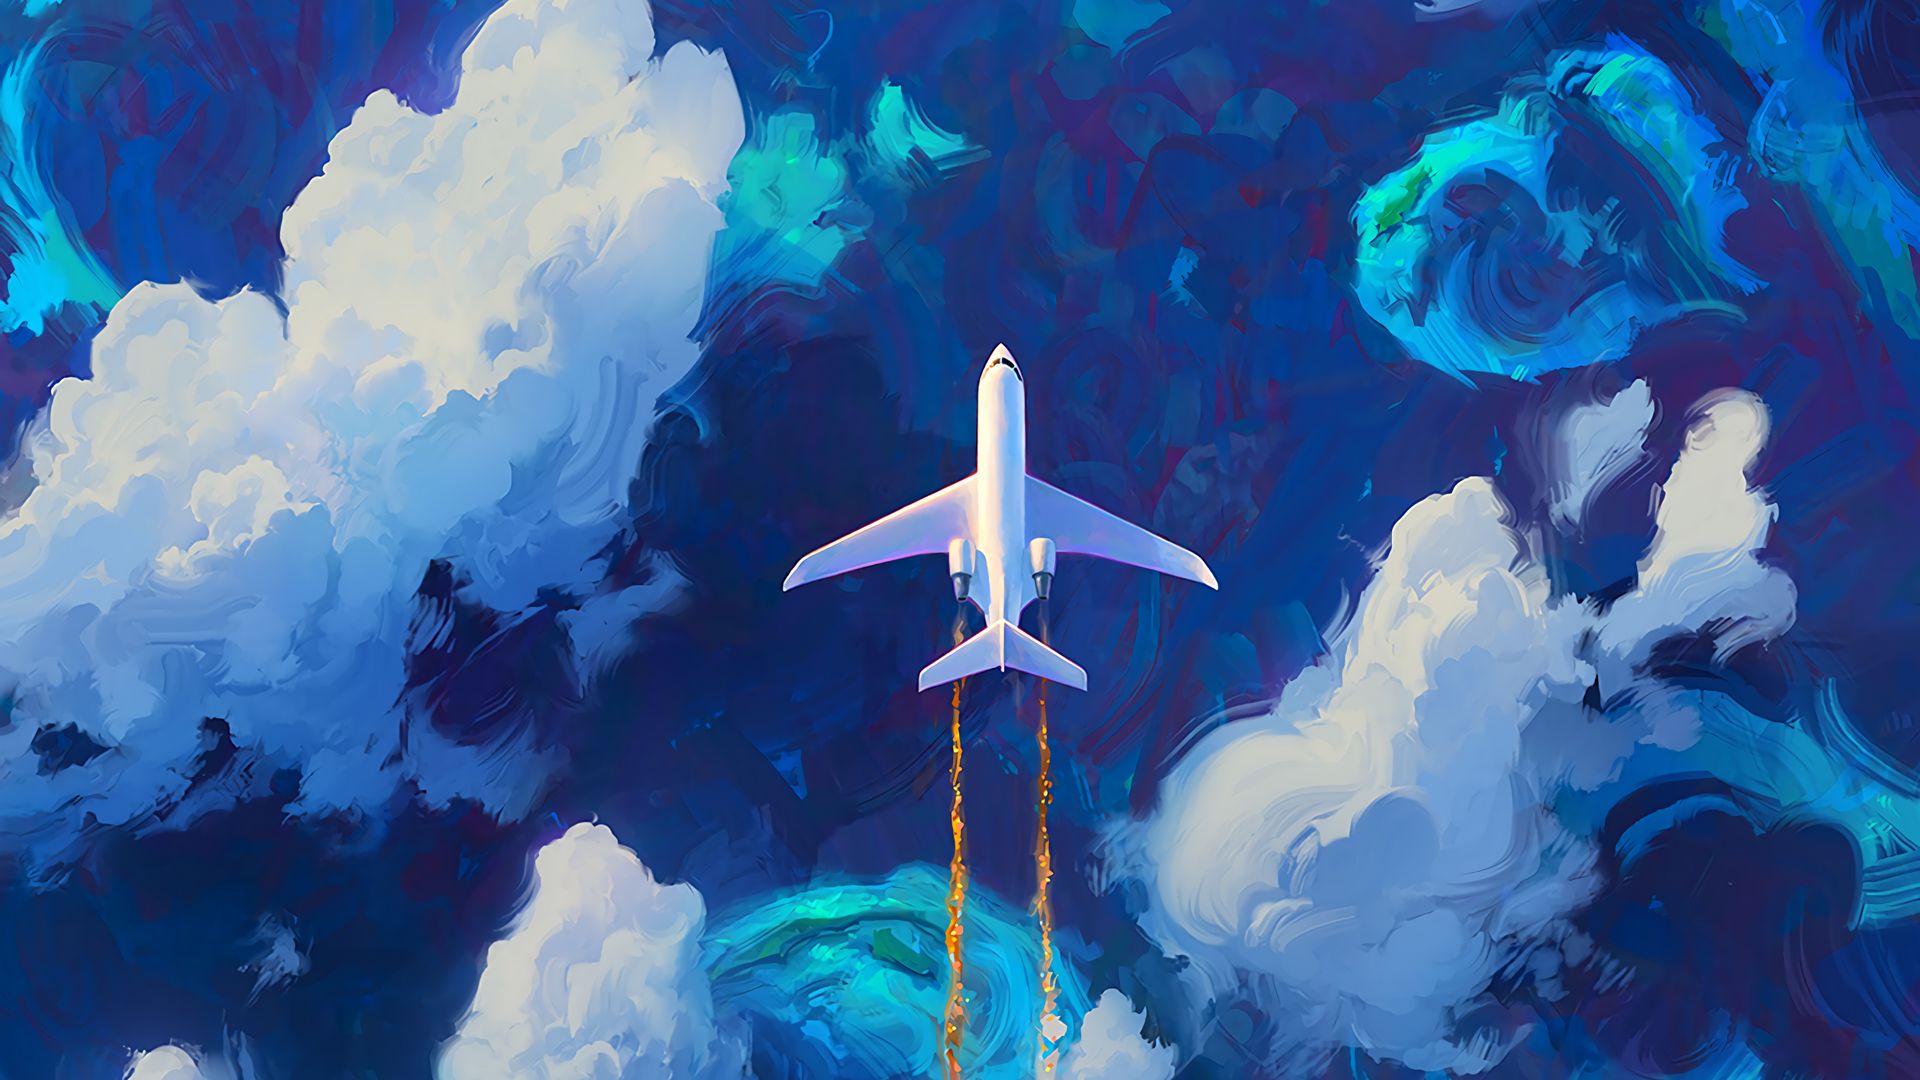 Download wallpaper 1920x1080 plane, sky, art, flight, clouds full hd, hdtv,  fhd, 1080p hd background